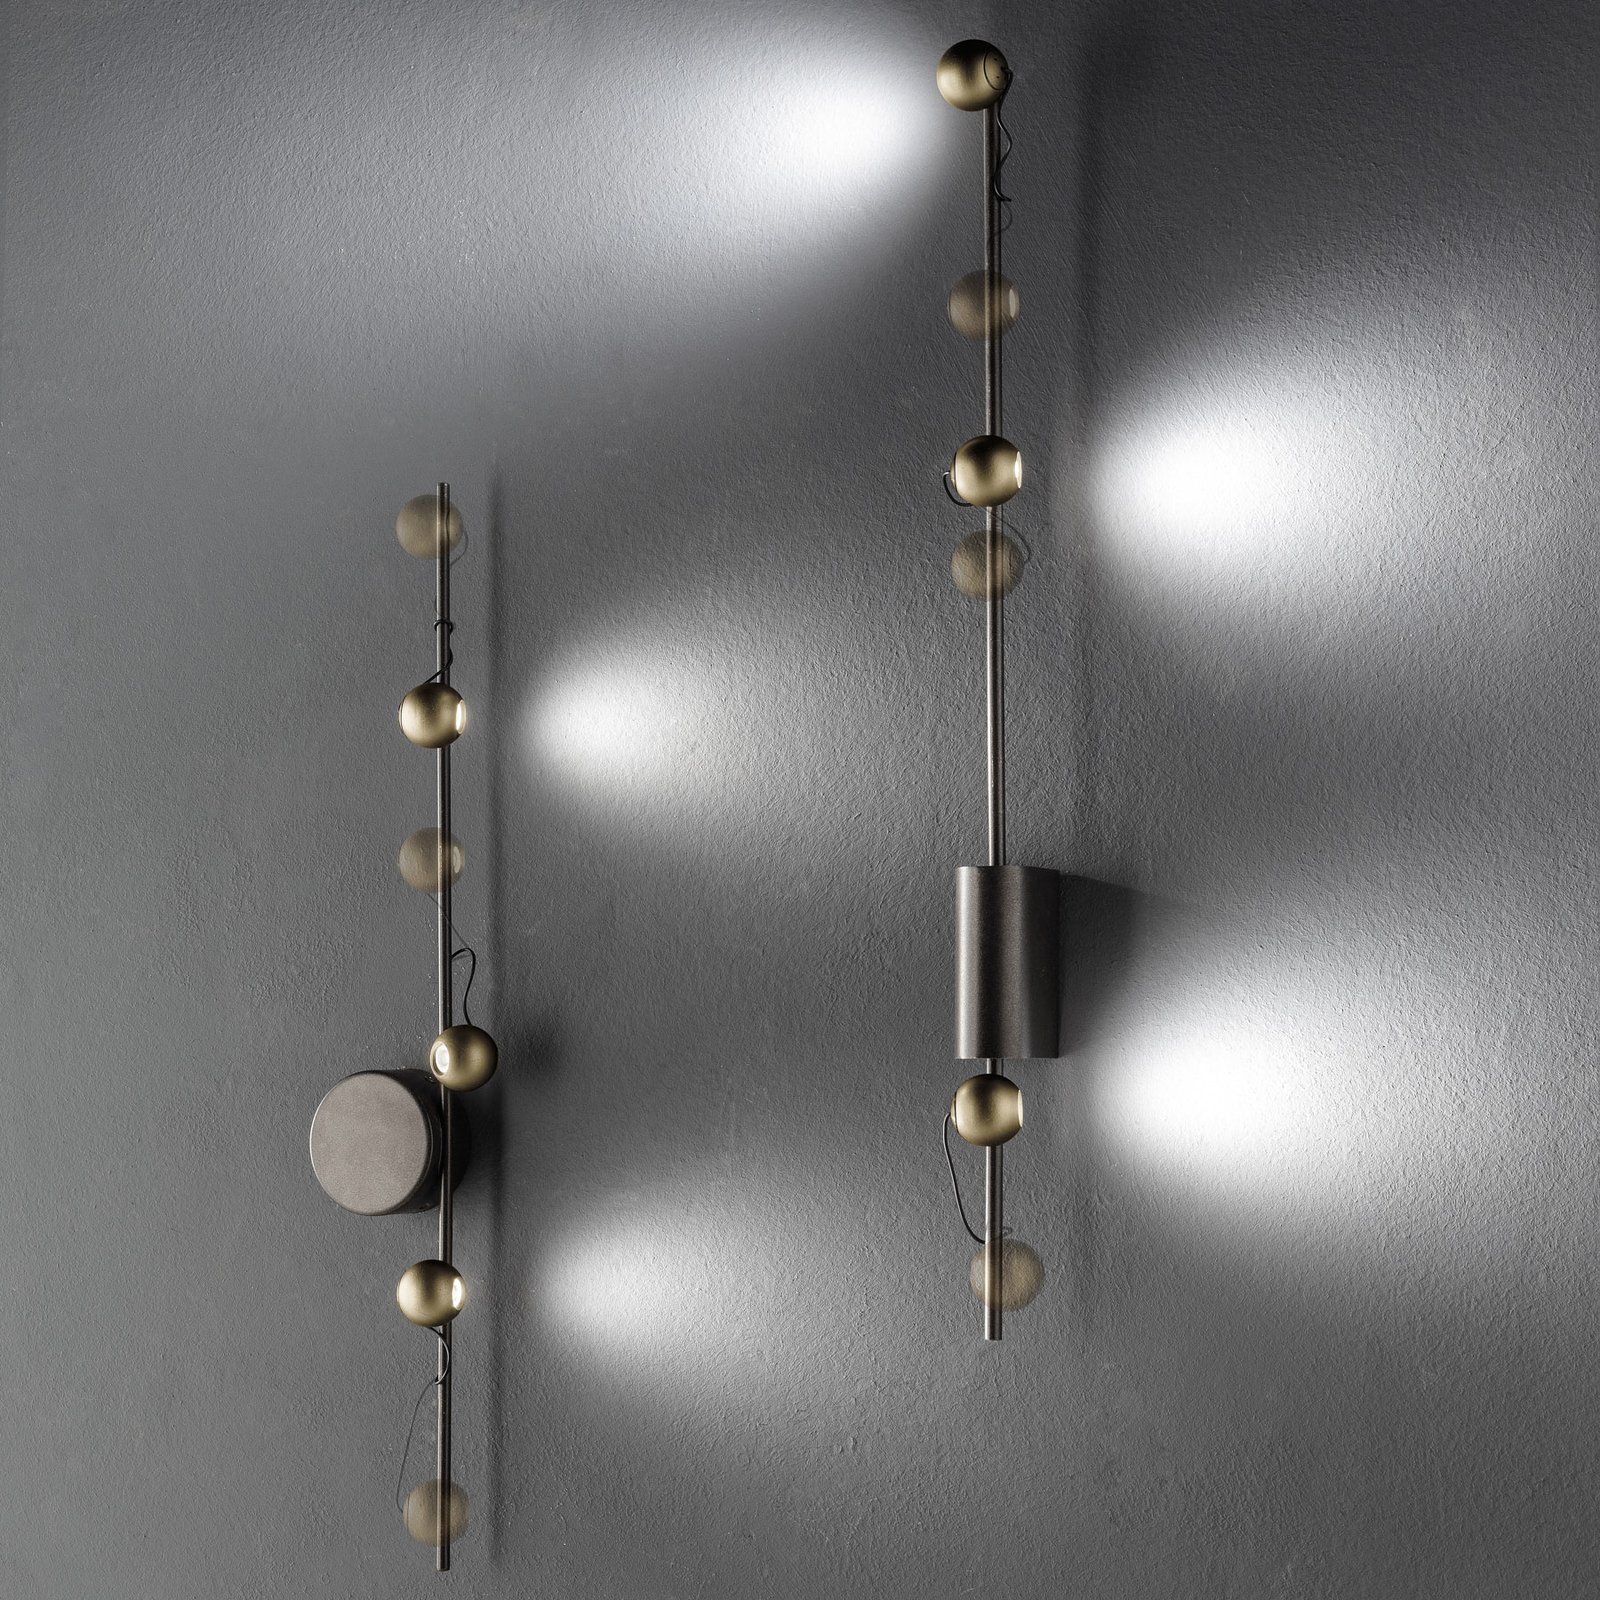 LED sienas apgaismojums Magnetic C, bronzas/zelta krāsā